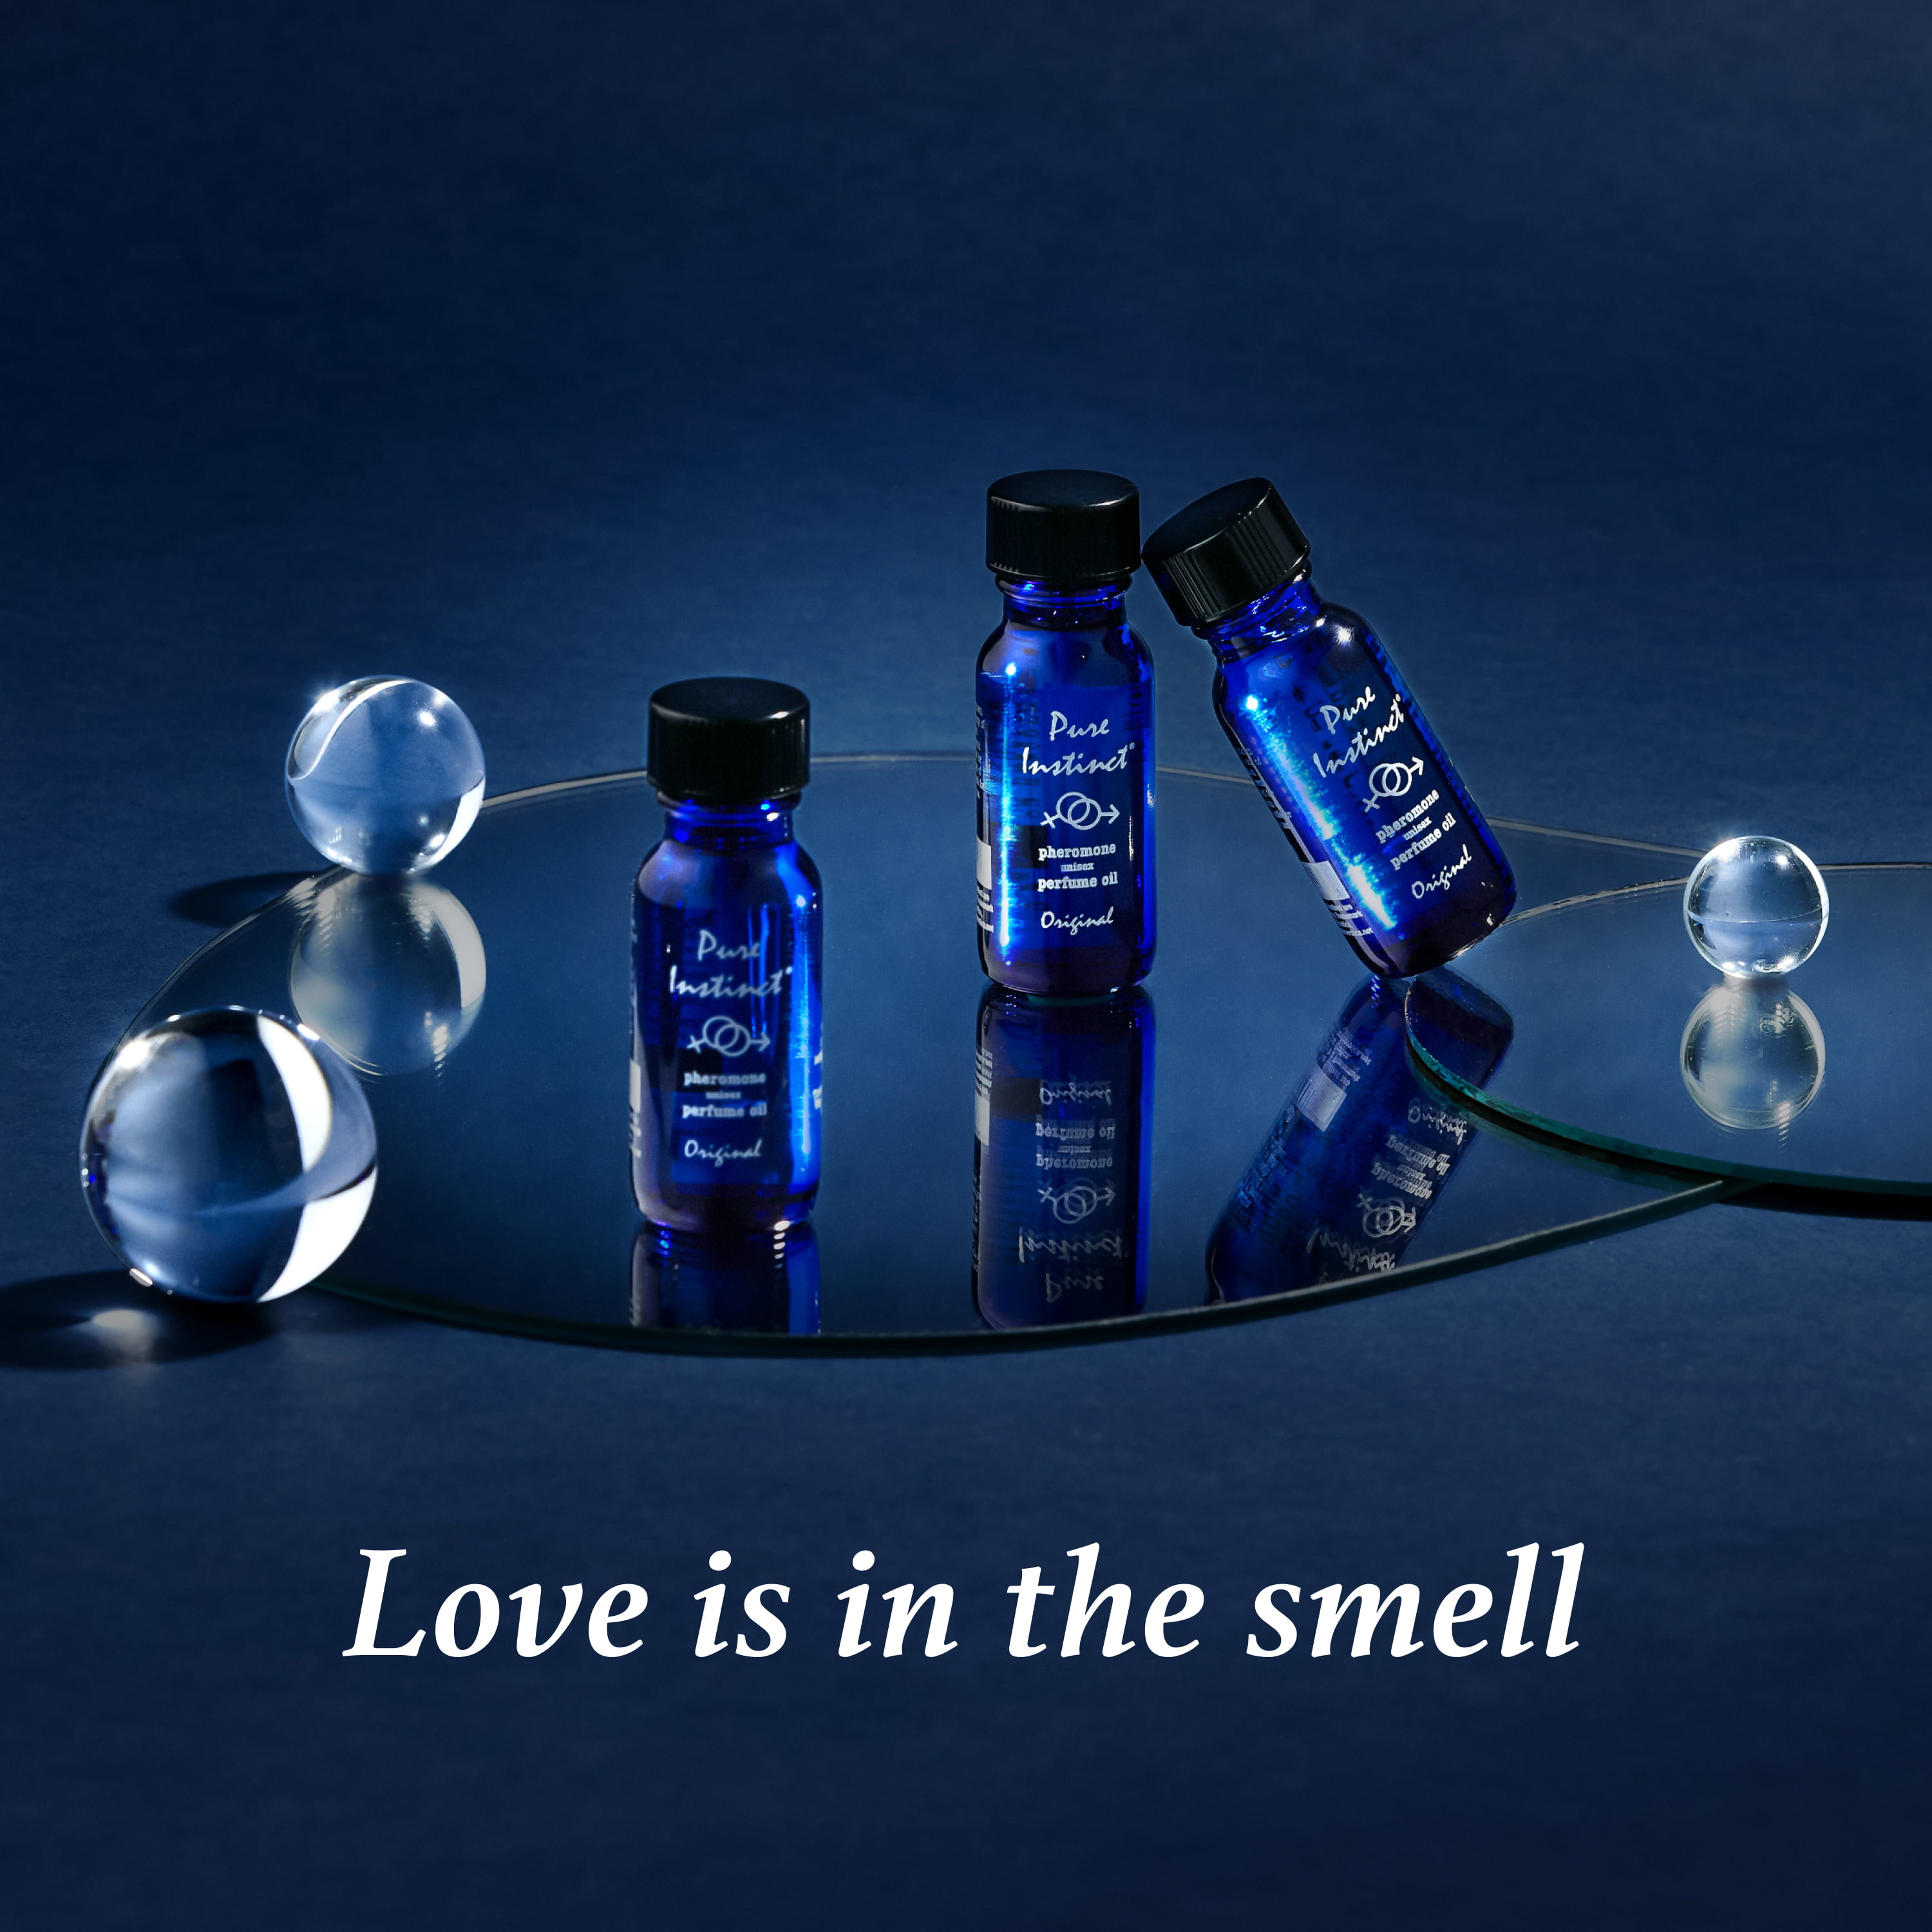 Pure Instinct Pheromone Perfume Oil - 0.5 fl. oz. Bottle